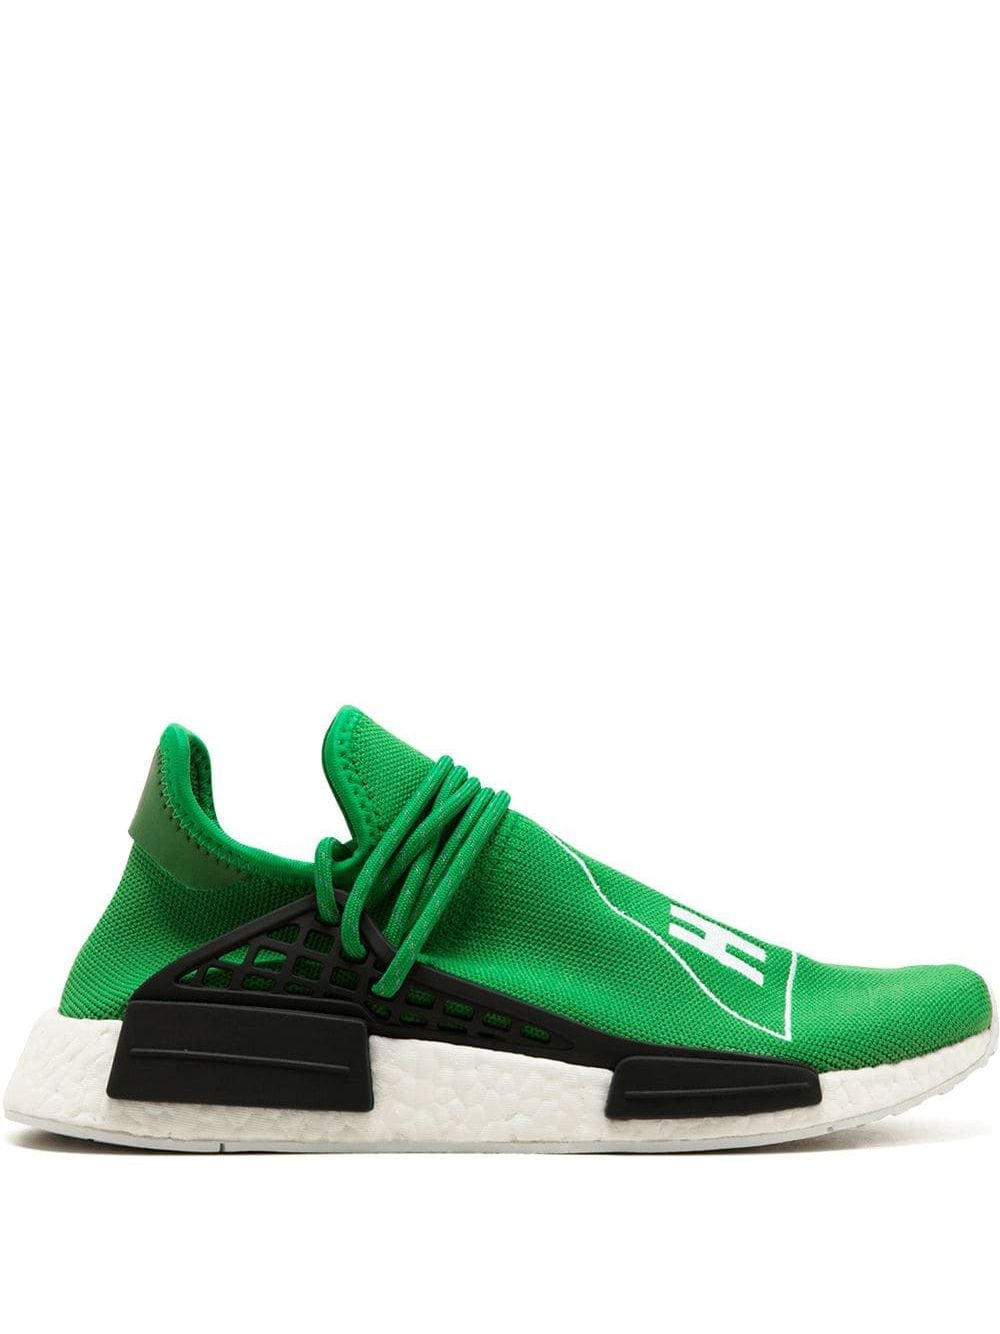 Adidas Originals X Pharrell Williams Human Race Nmd Sneakers In Green